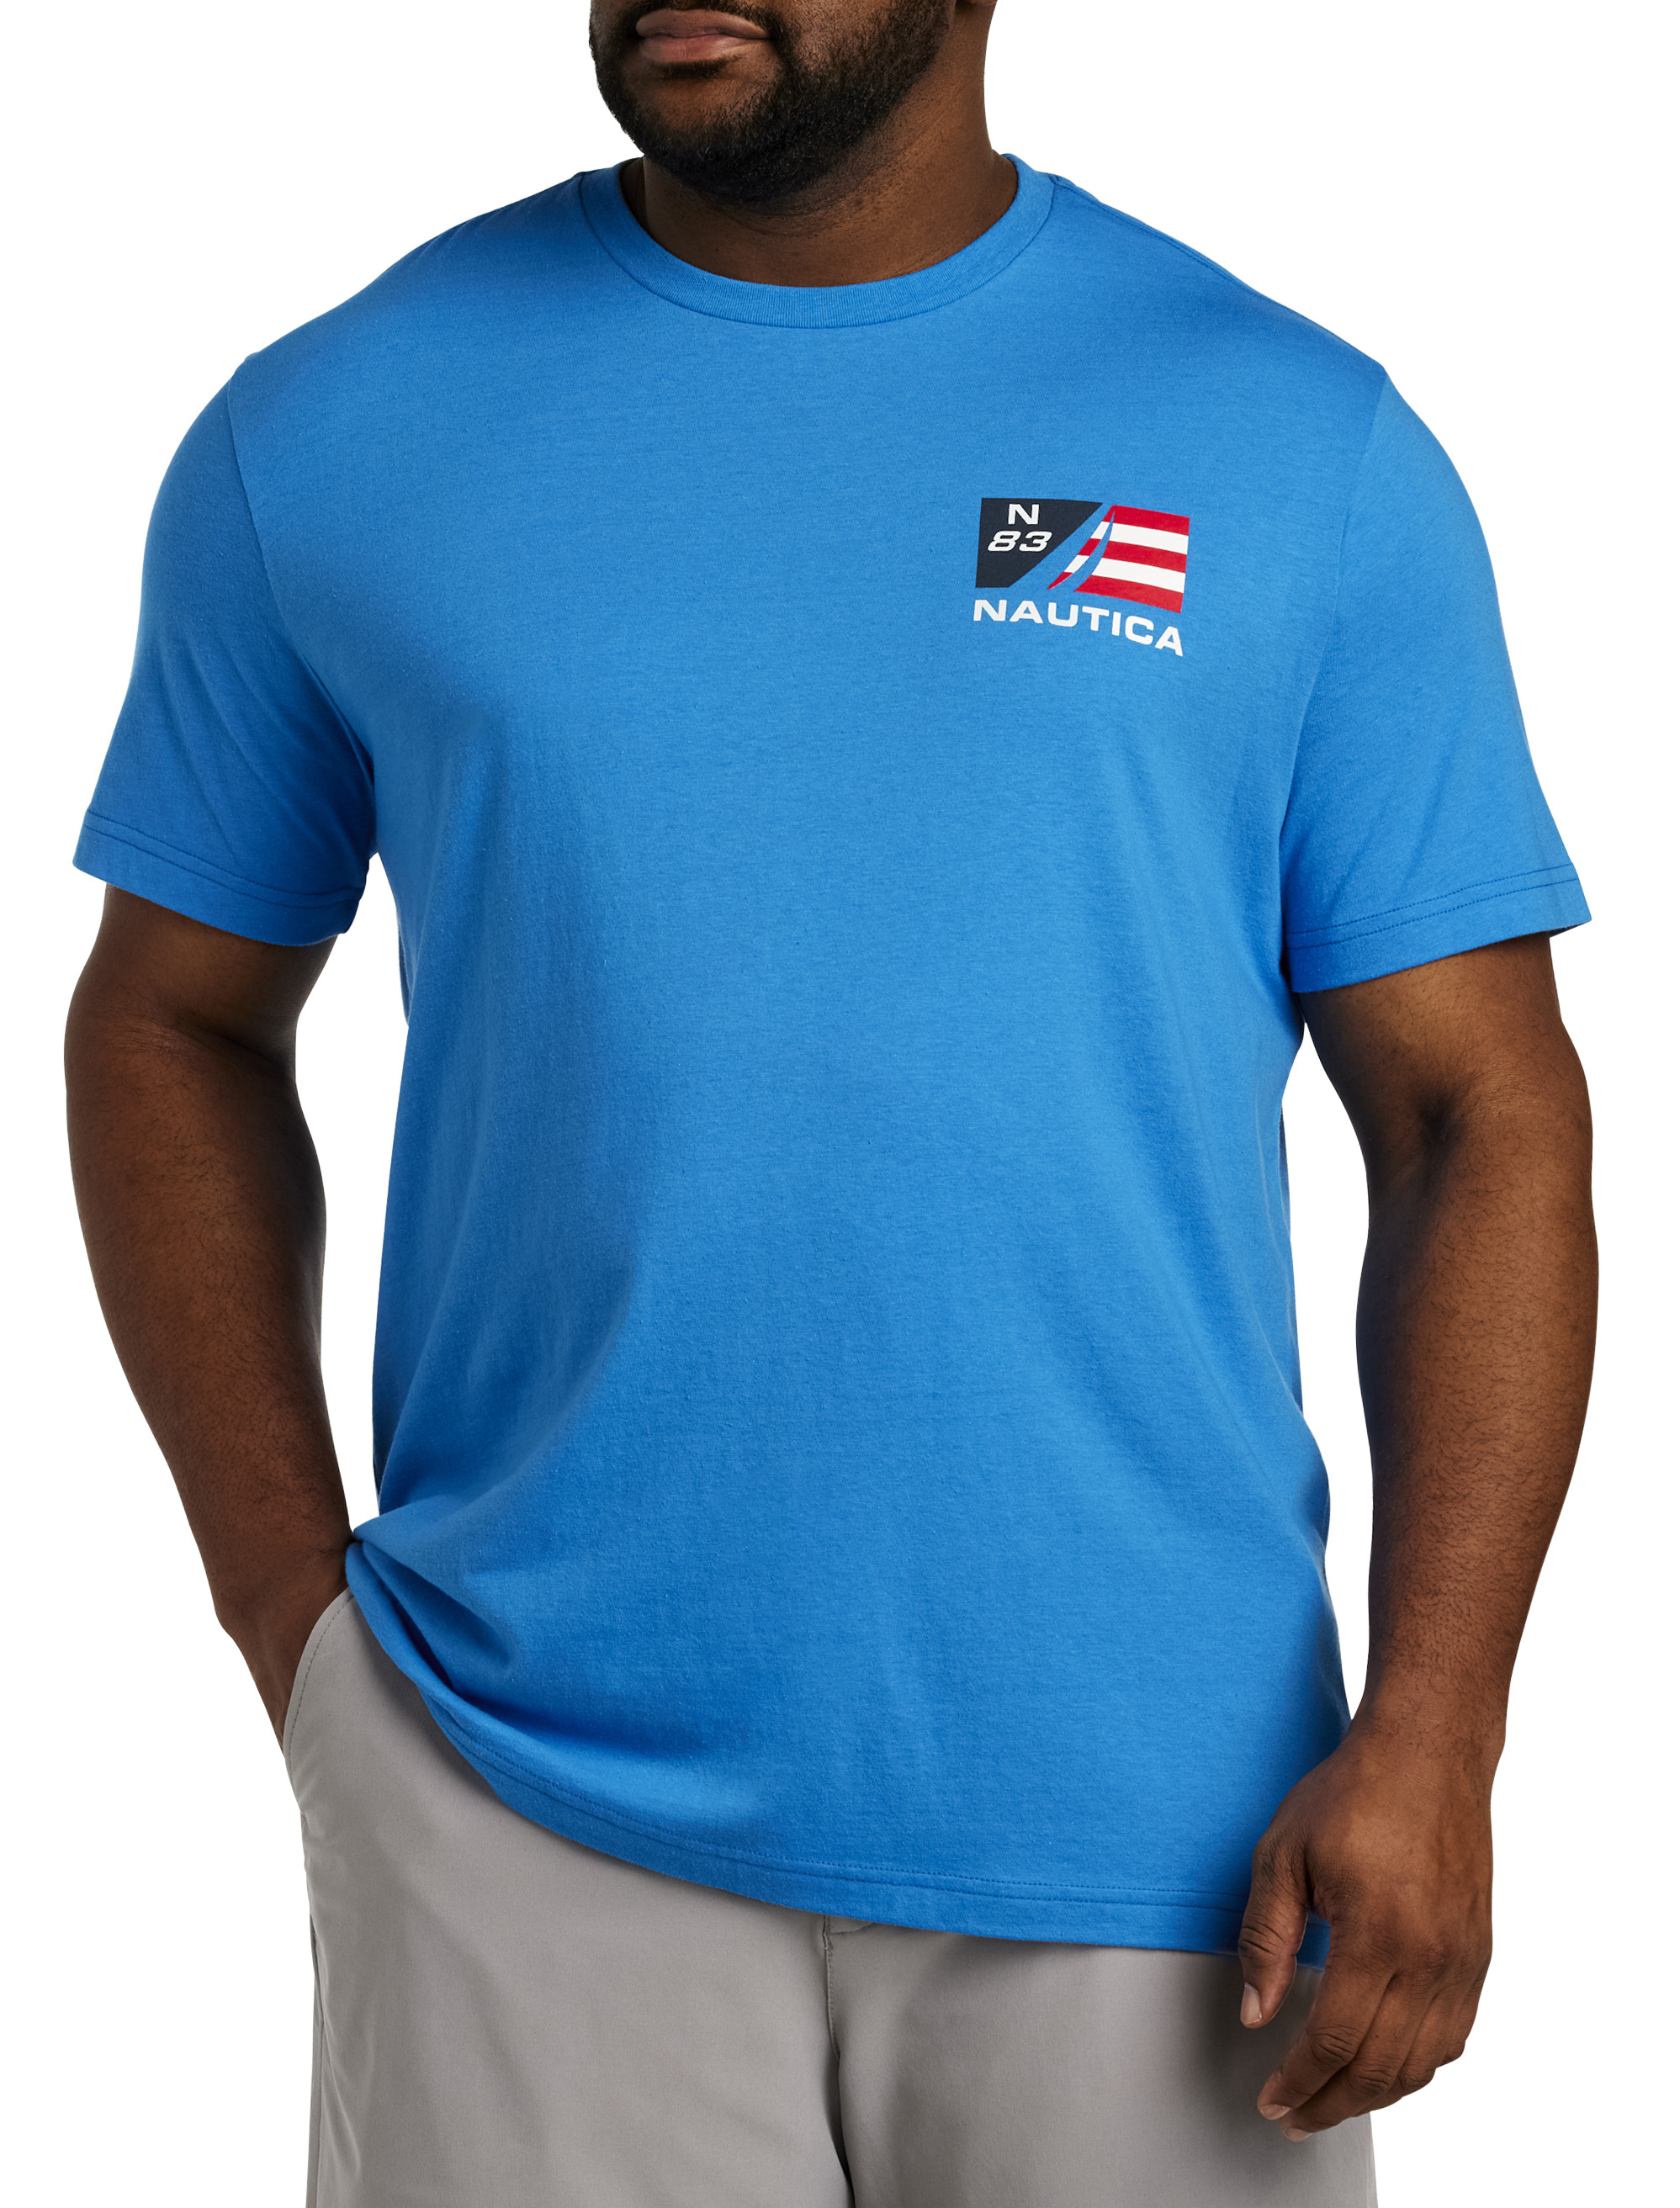 Big + Tall, Nautica Flag N83 T-Shirt